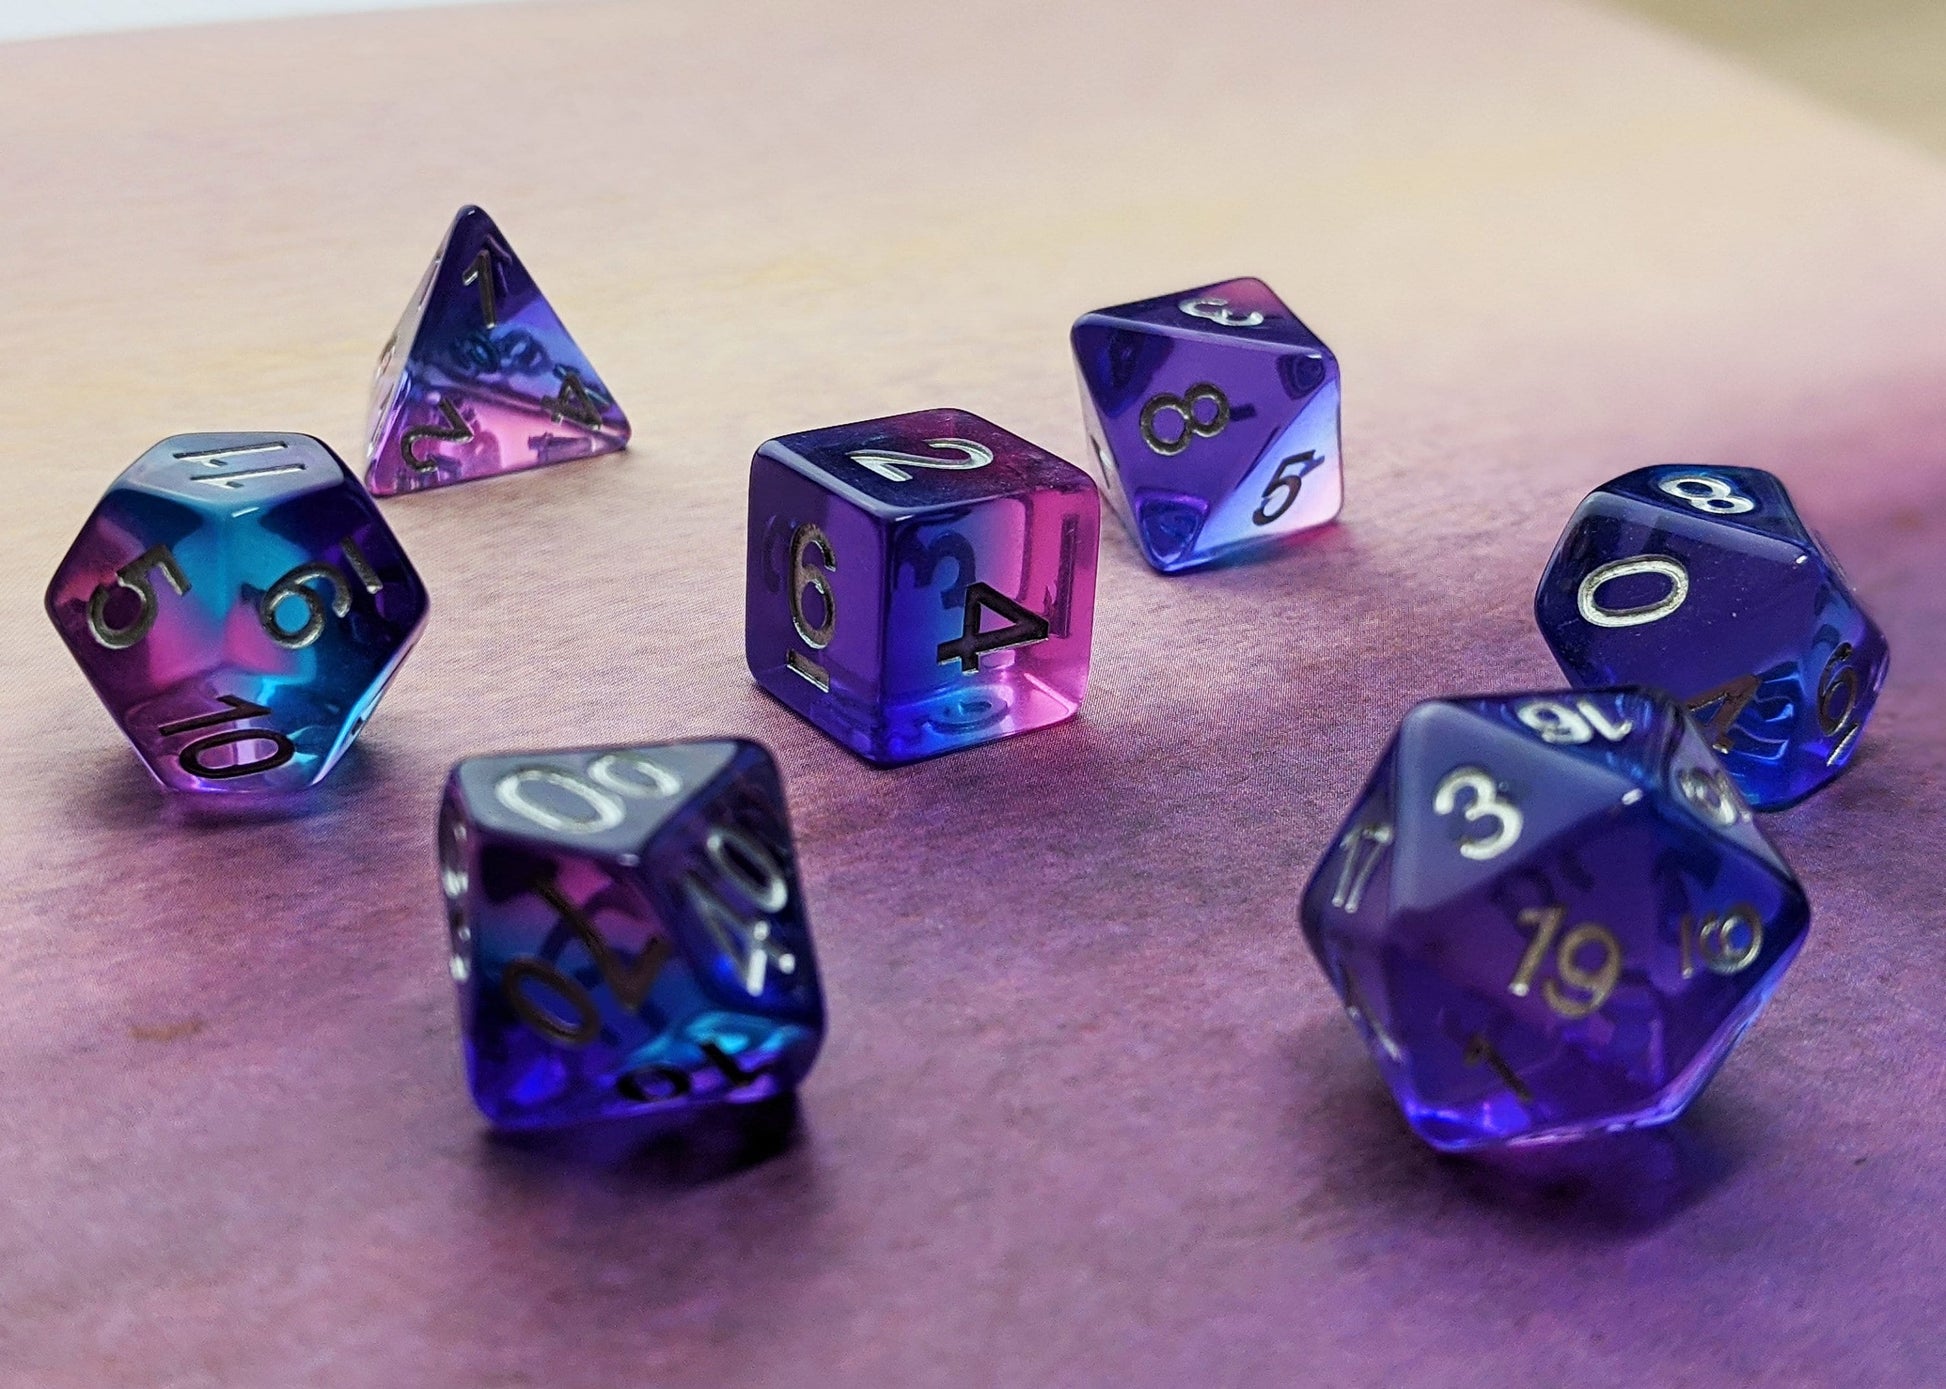 Twilight Sky Polyhedral Dice Set - Layered Translucent Pink Blue Purple Dice